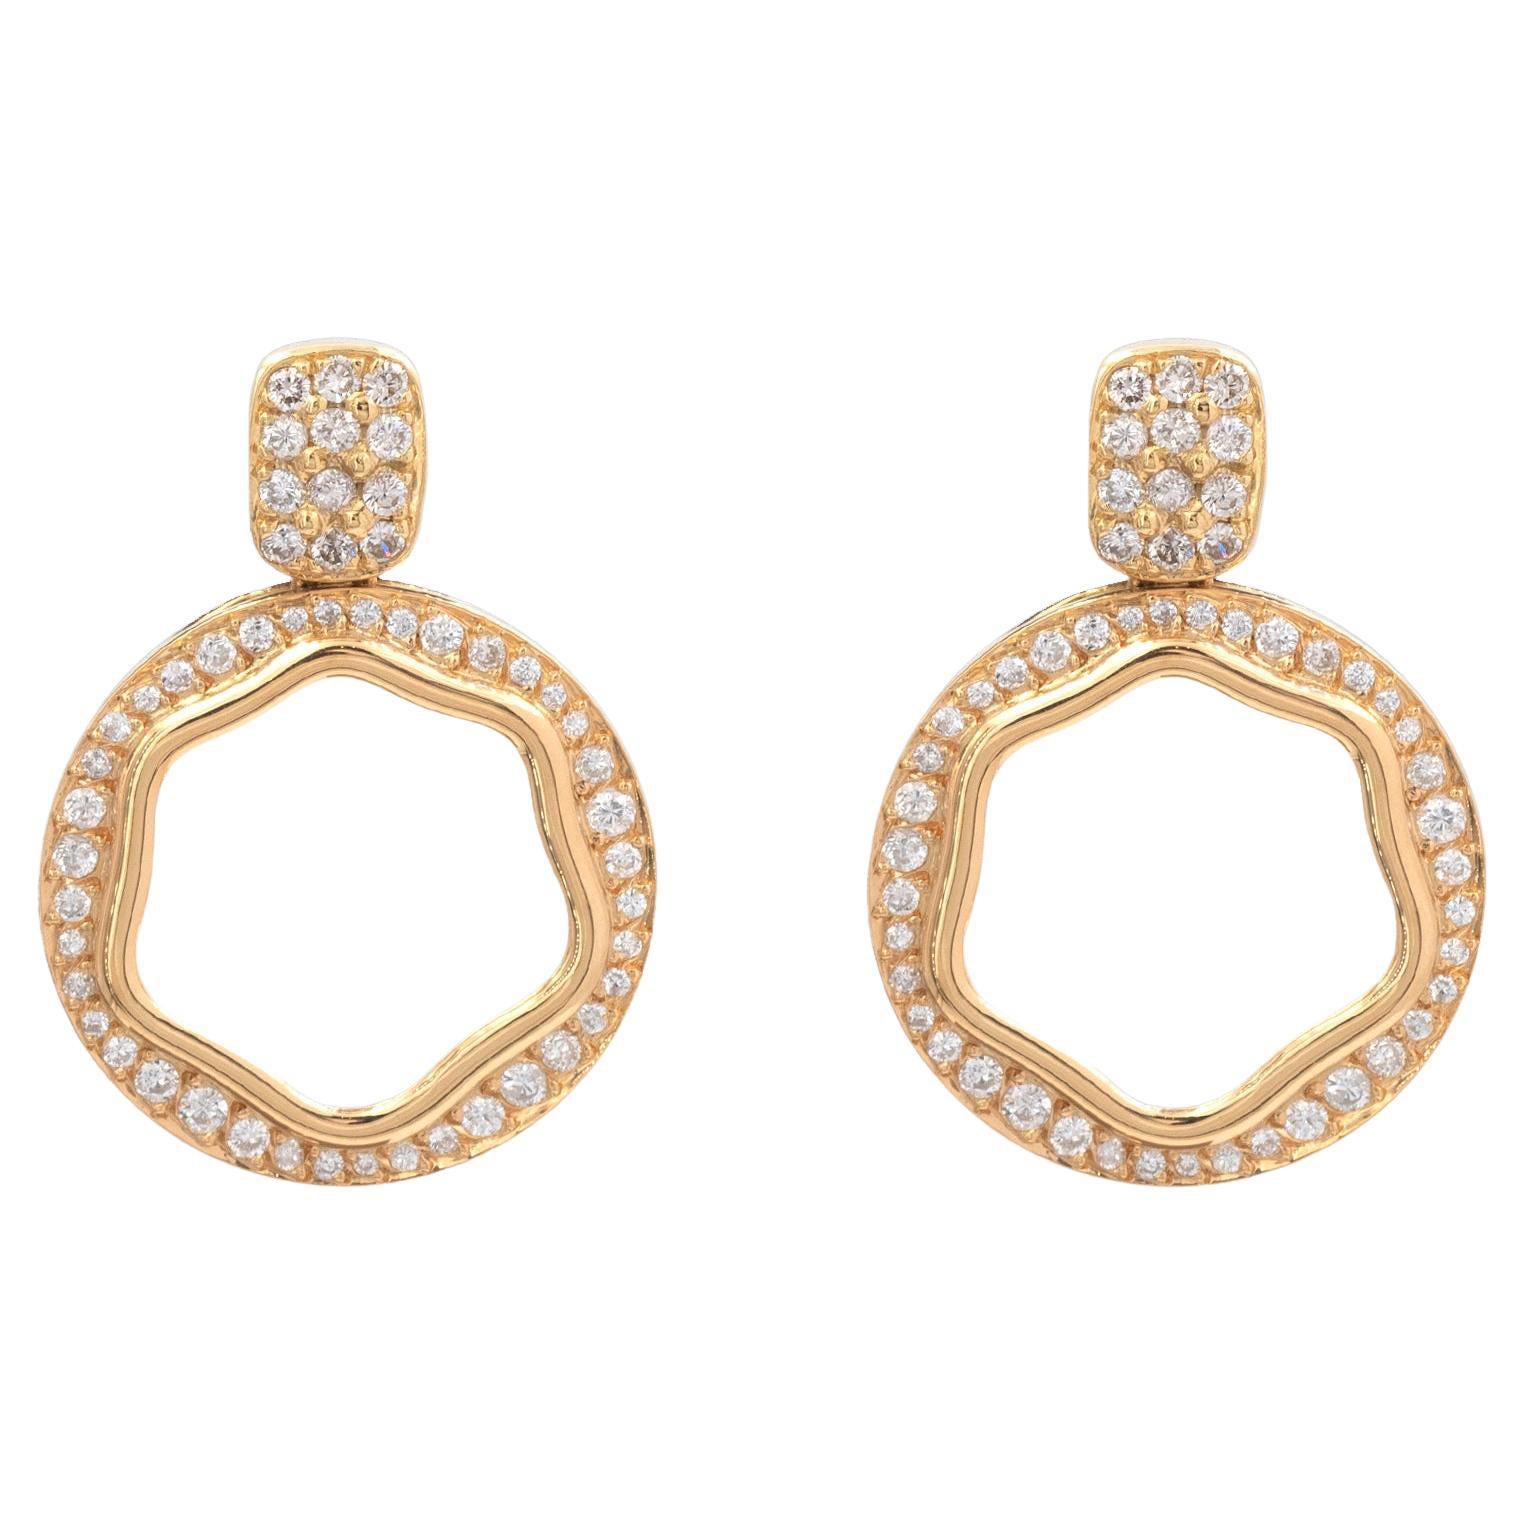 18 Karat Gold and Diamond Circle Earrings